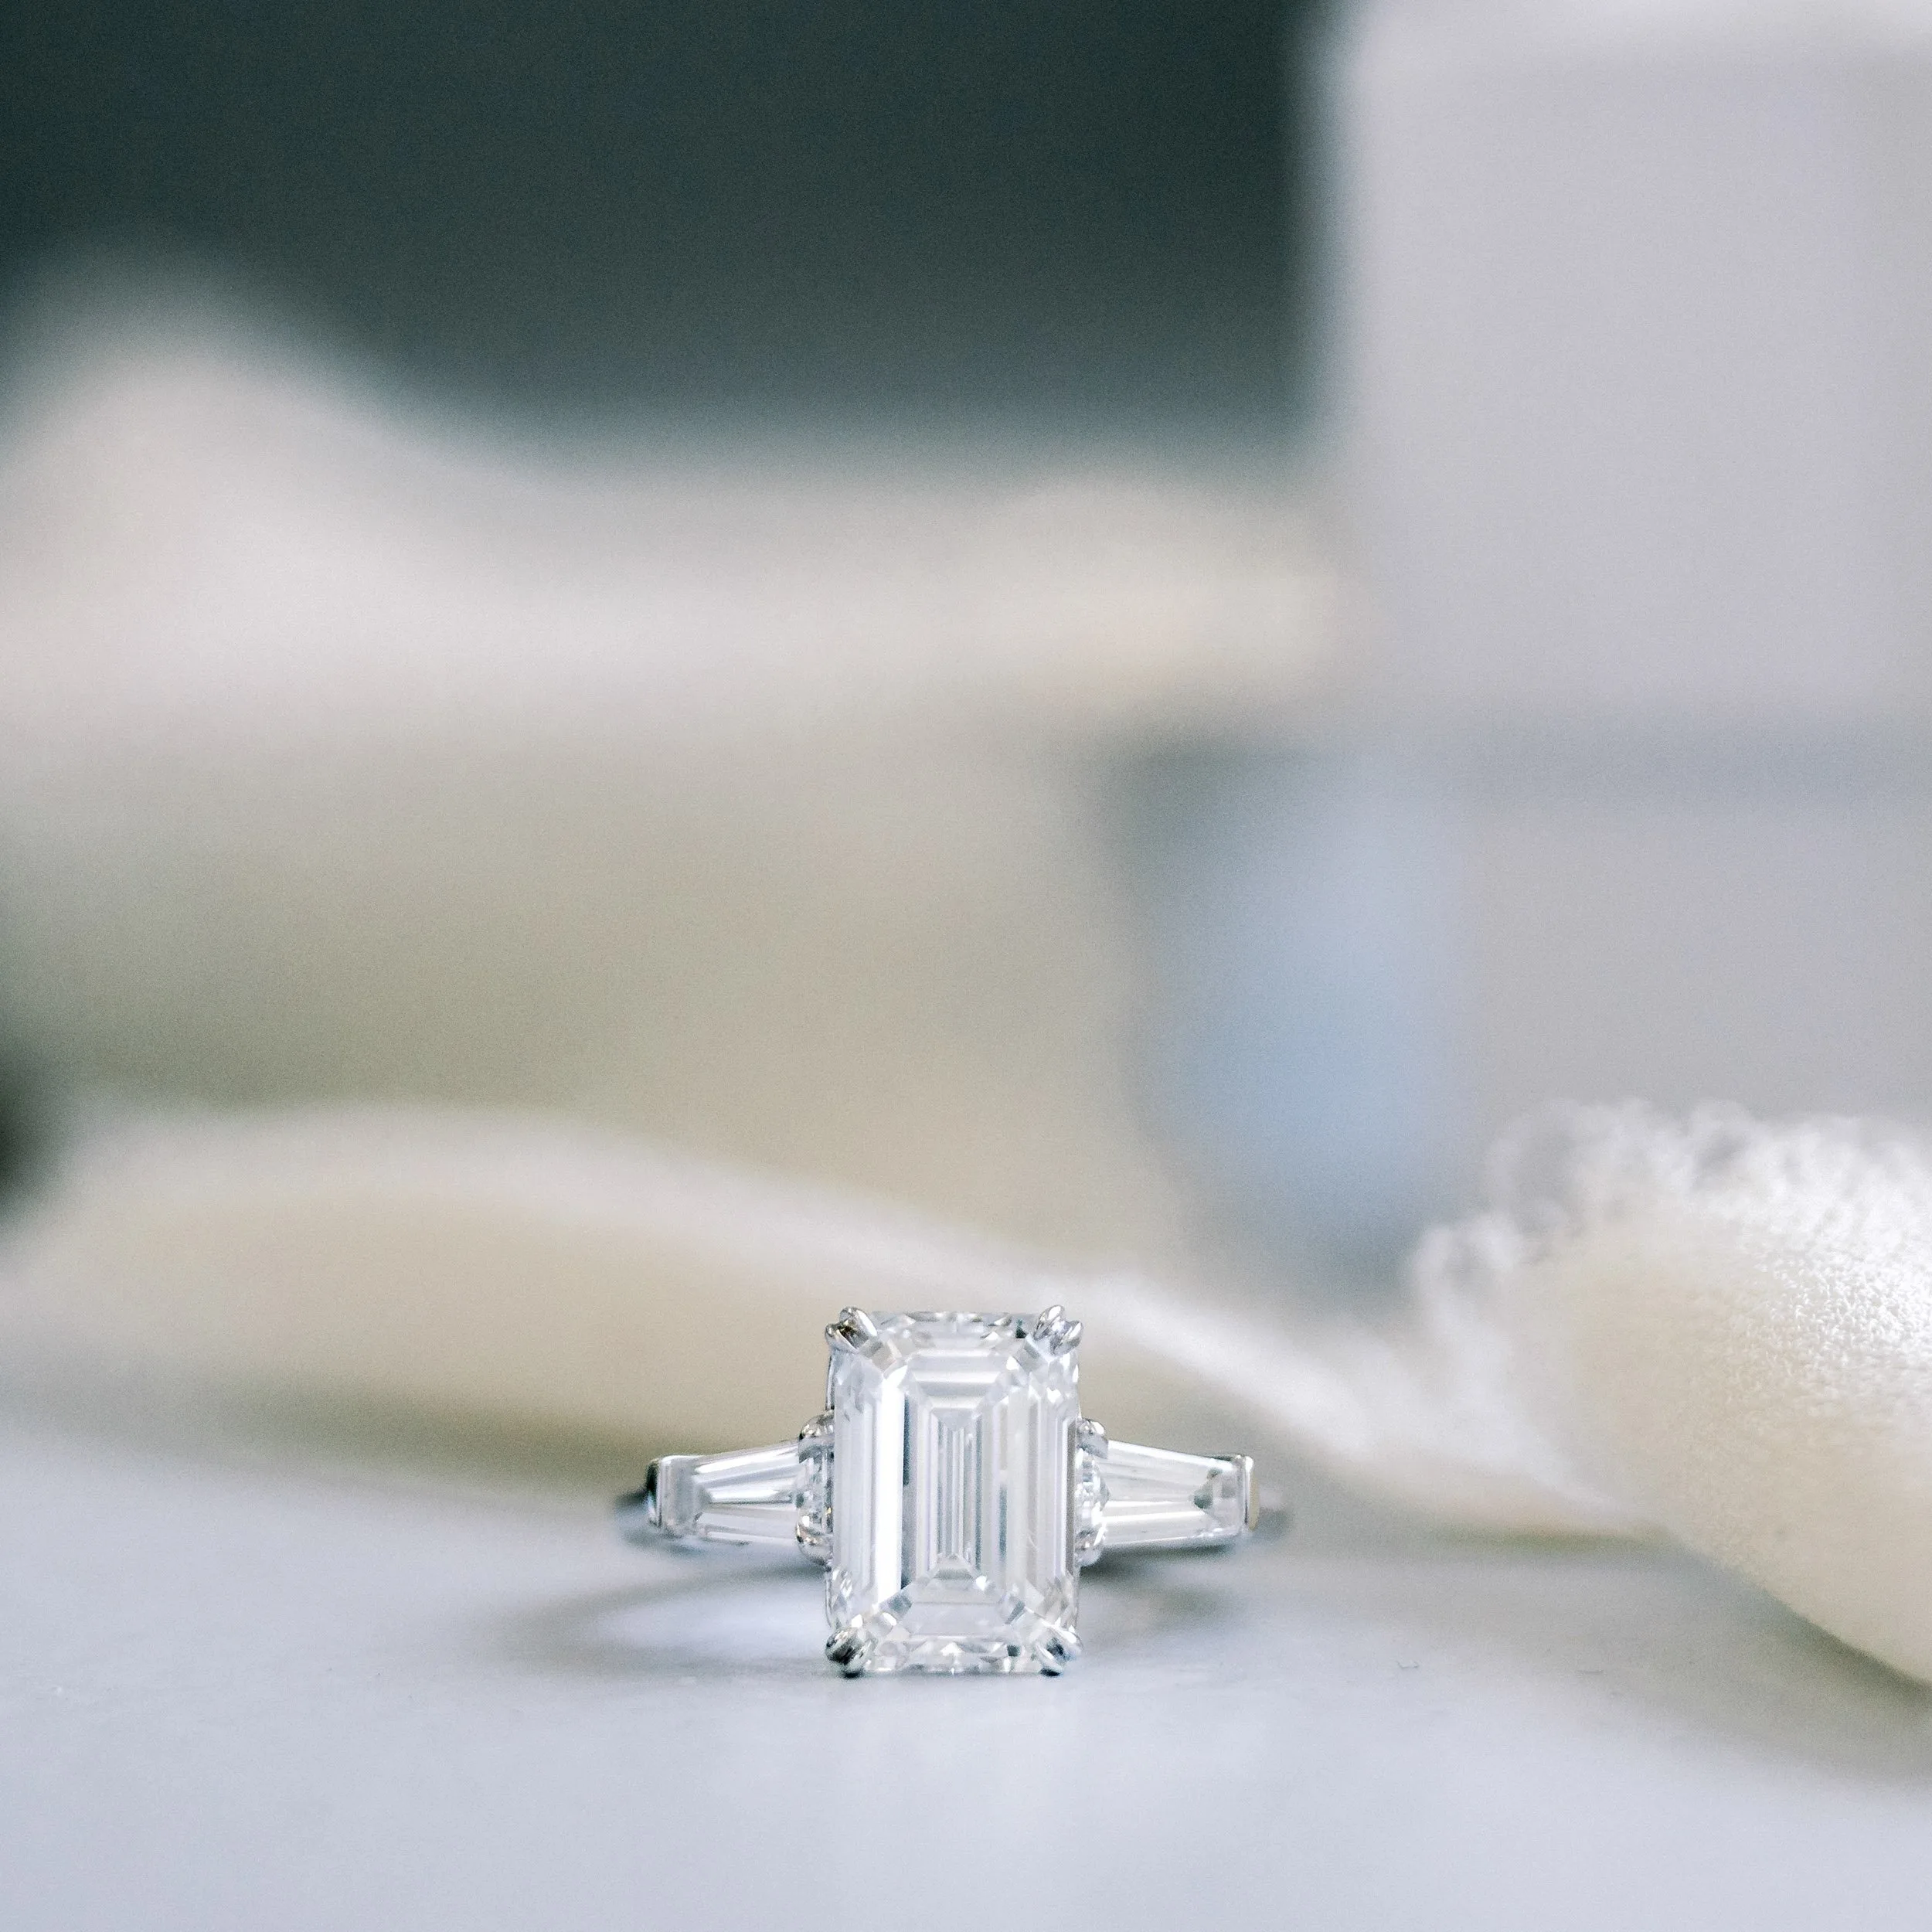 platinum four ct emerald cut lab created diamond engagement ring with baguette side stones ada diamonds design ad 464 macro